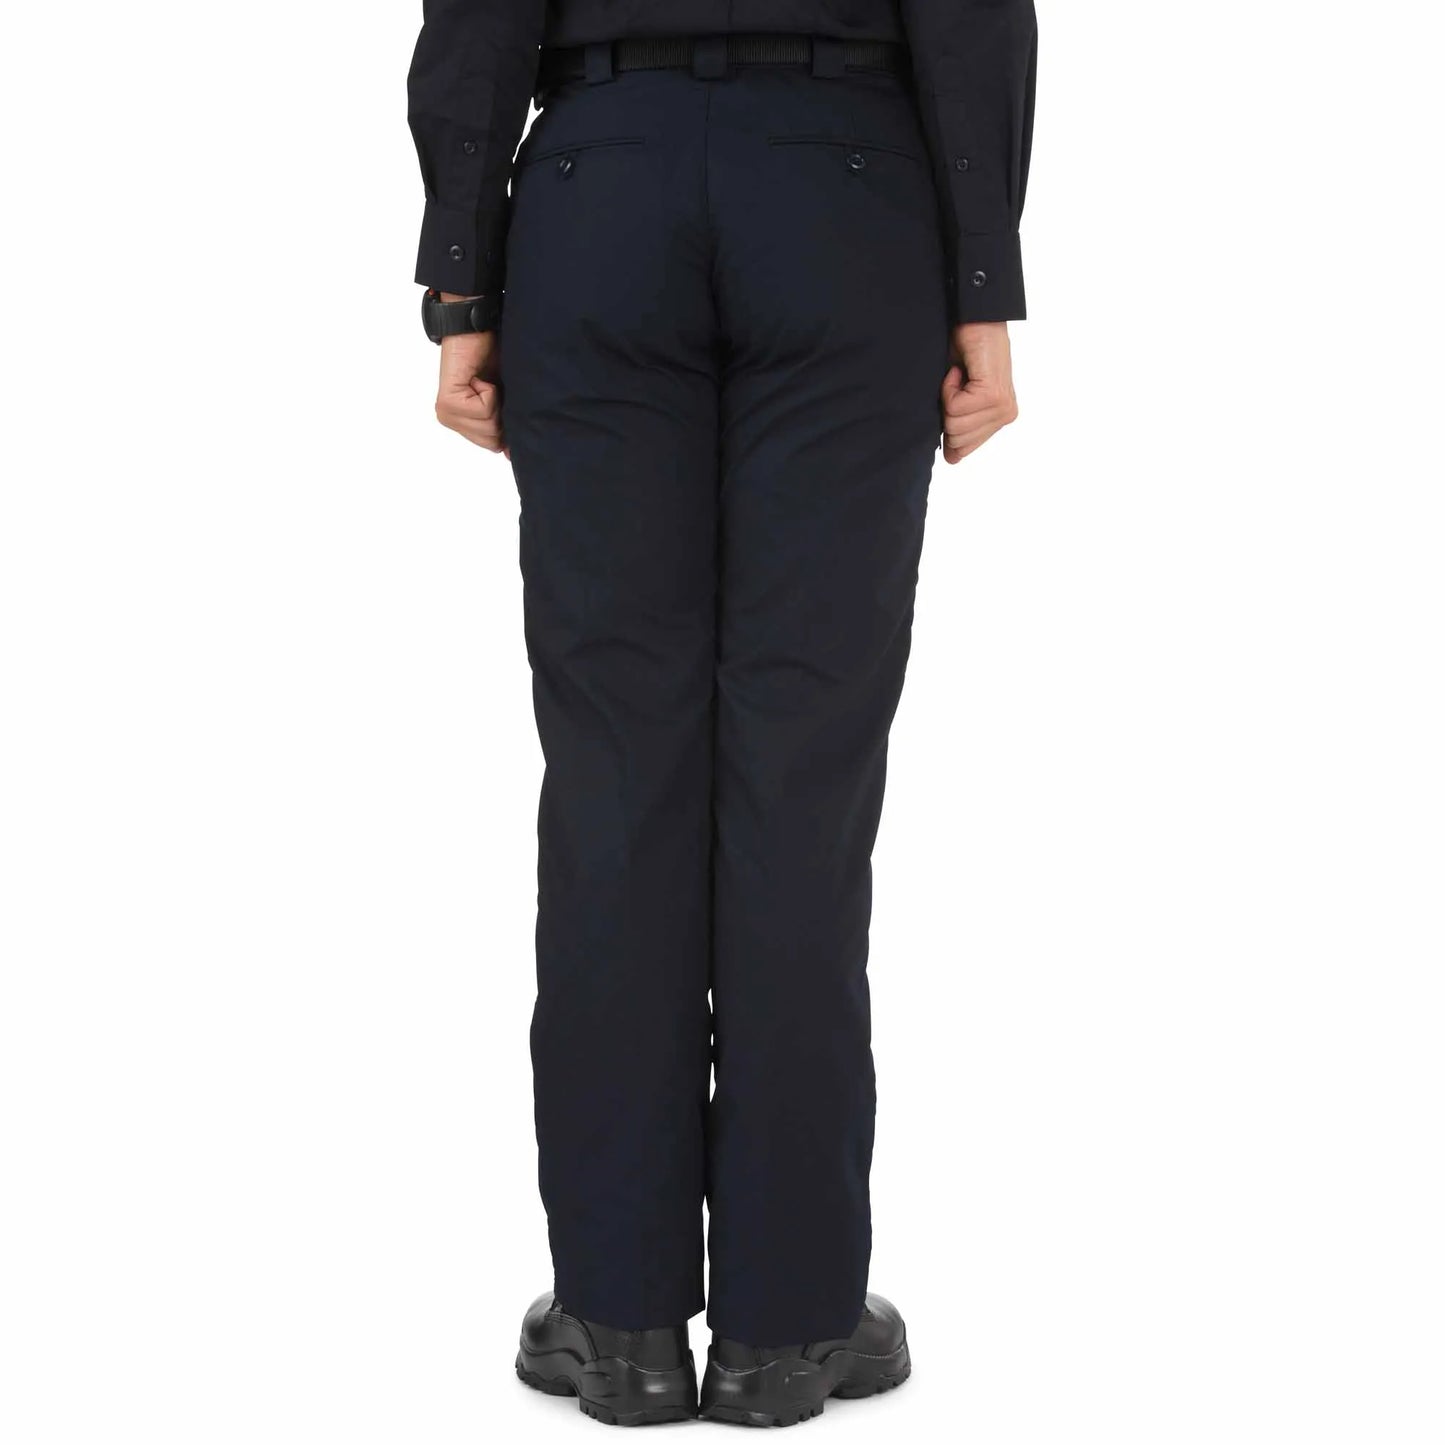 5.11 Tactical Women's Taclite PDU Class A Pants